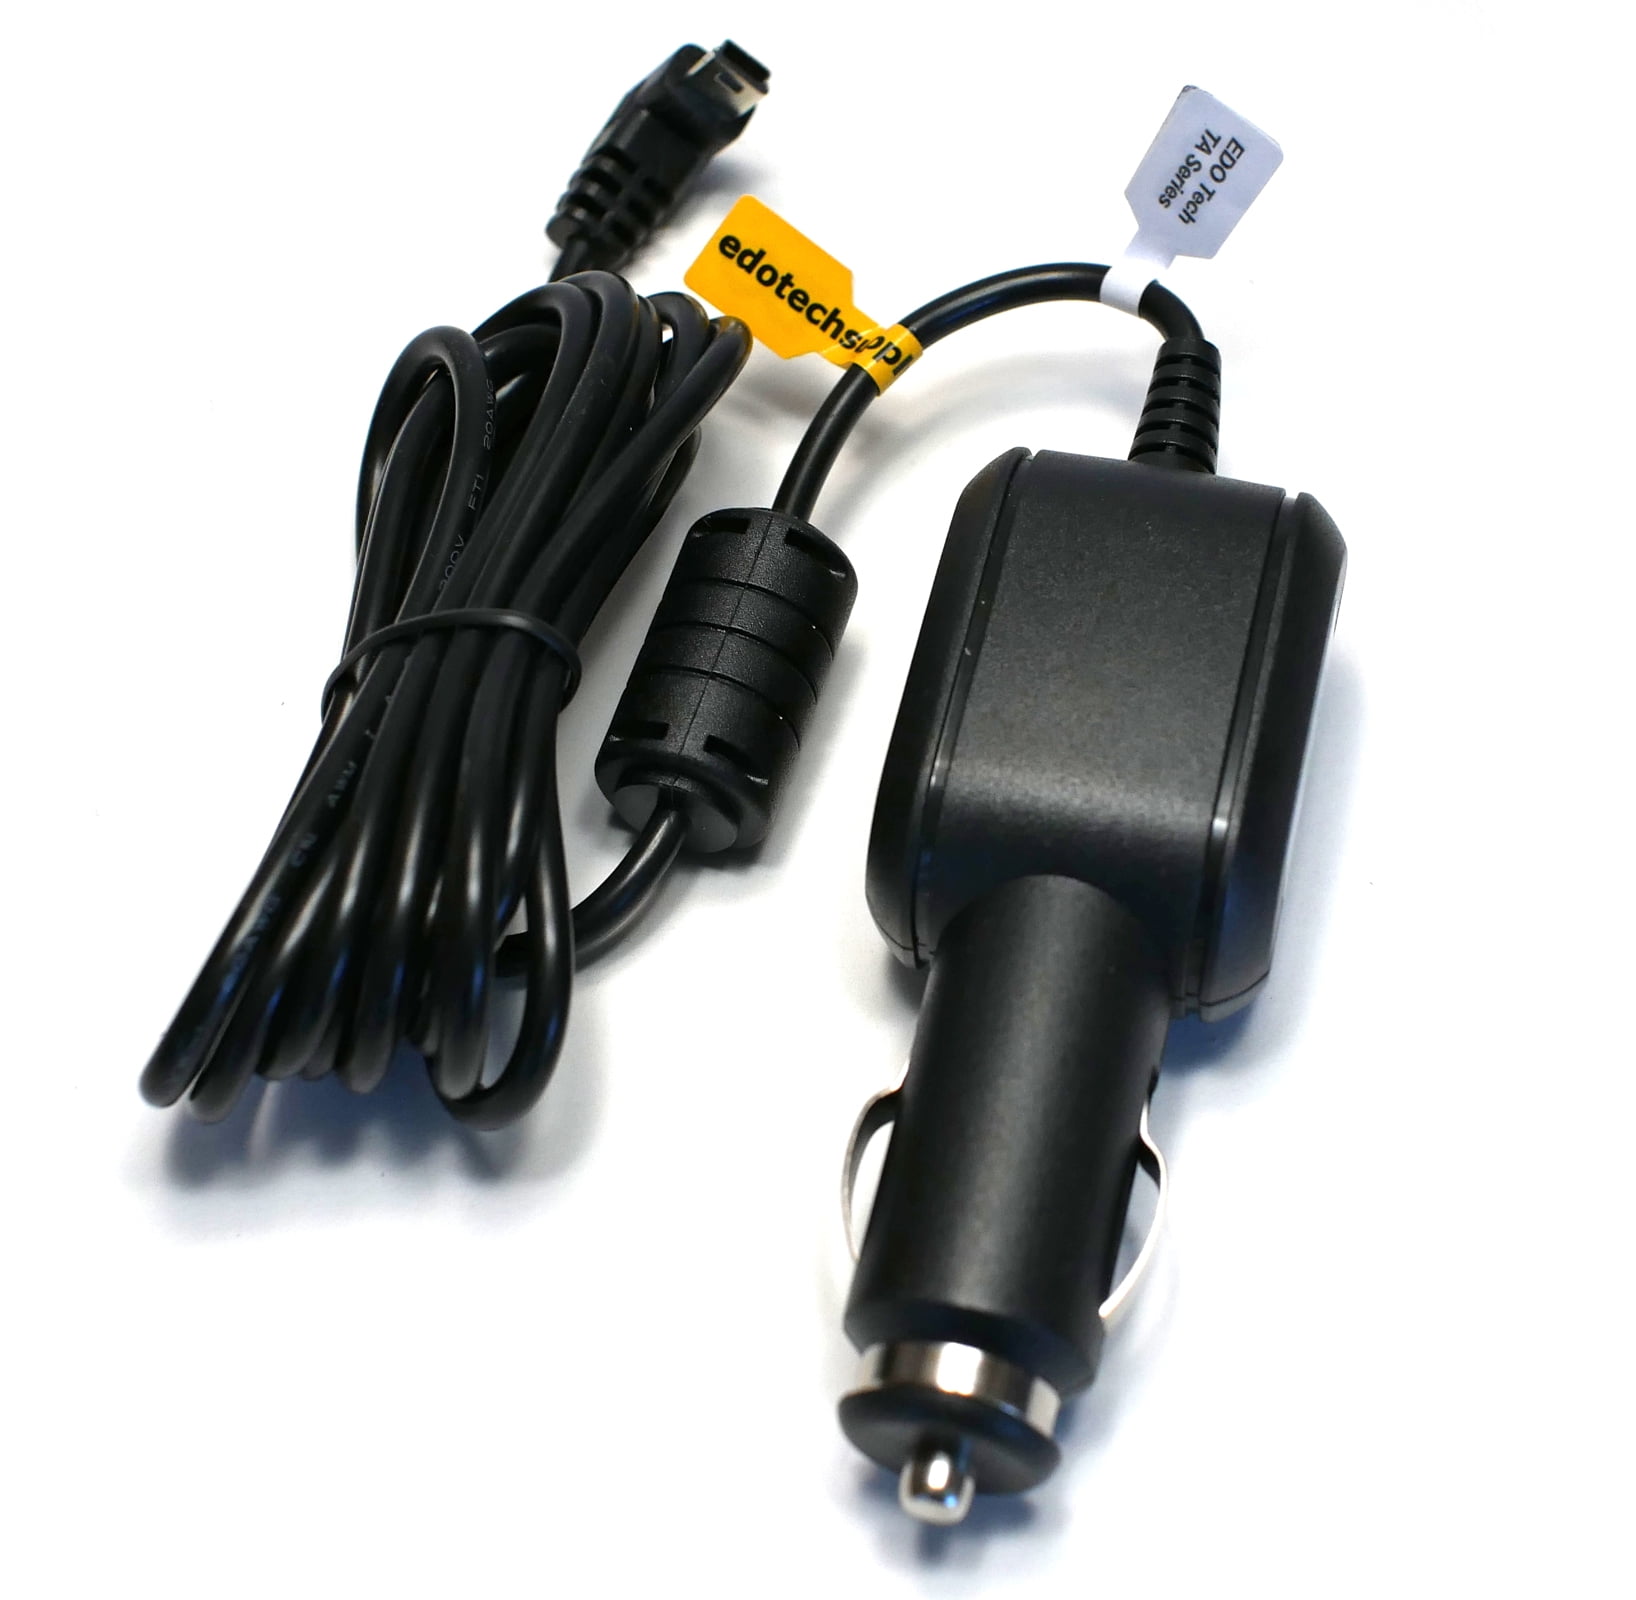 Ramtech 2A DC Car Power Charger Adapter Cable Cord for 7 Garmin Nuvi 2757 LM/2789 LMT/2797 LMT/2798 LMT GPS Micro-USB Input on Unit Itself CHMCA + Free Bonus Stylus Pen 